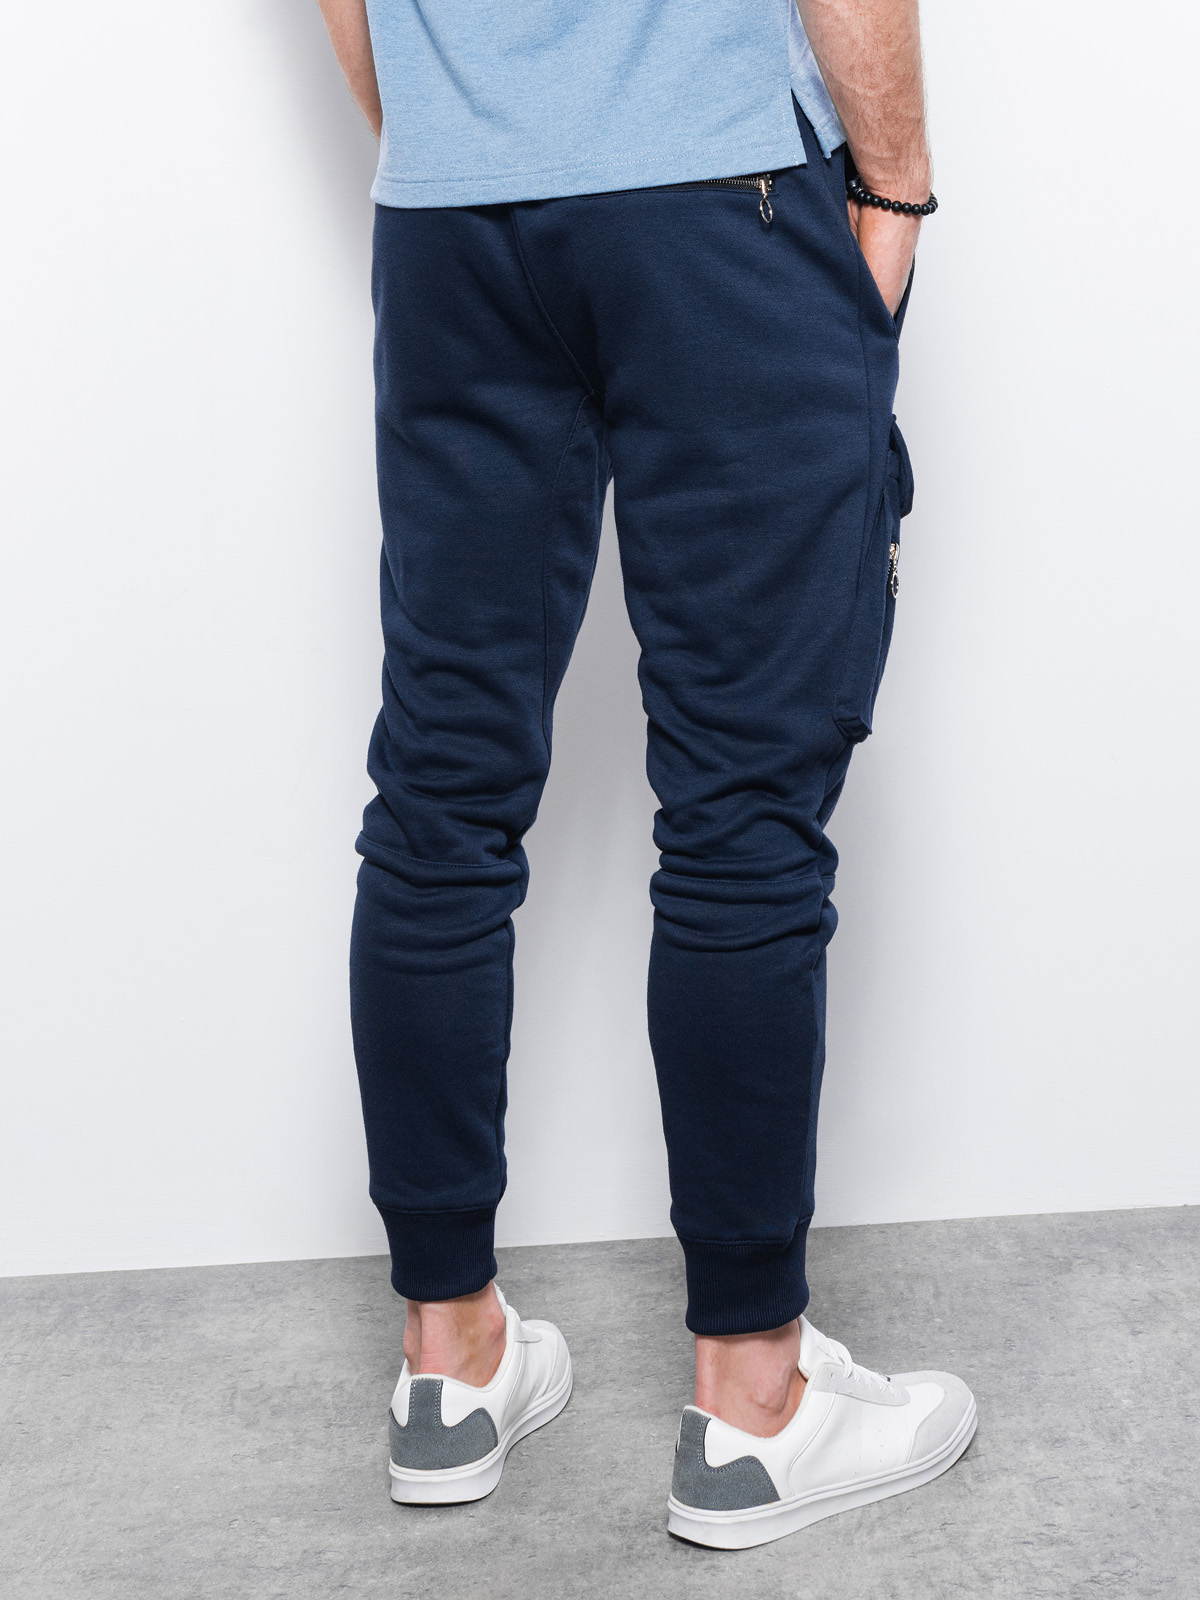 Pantaloni pentru barbati P905 - bleumarin